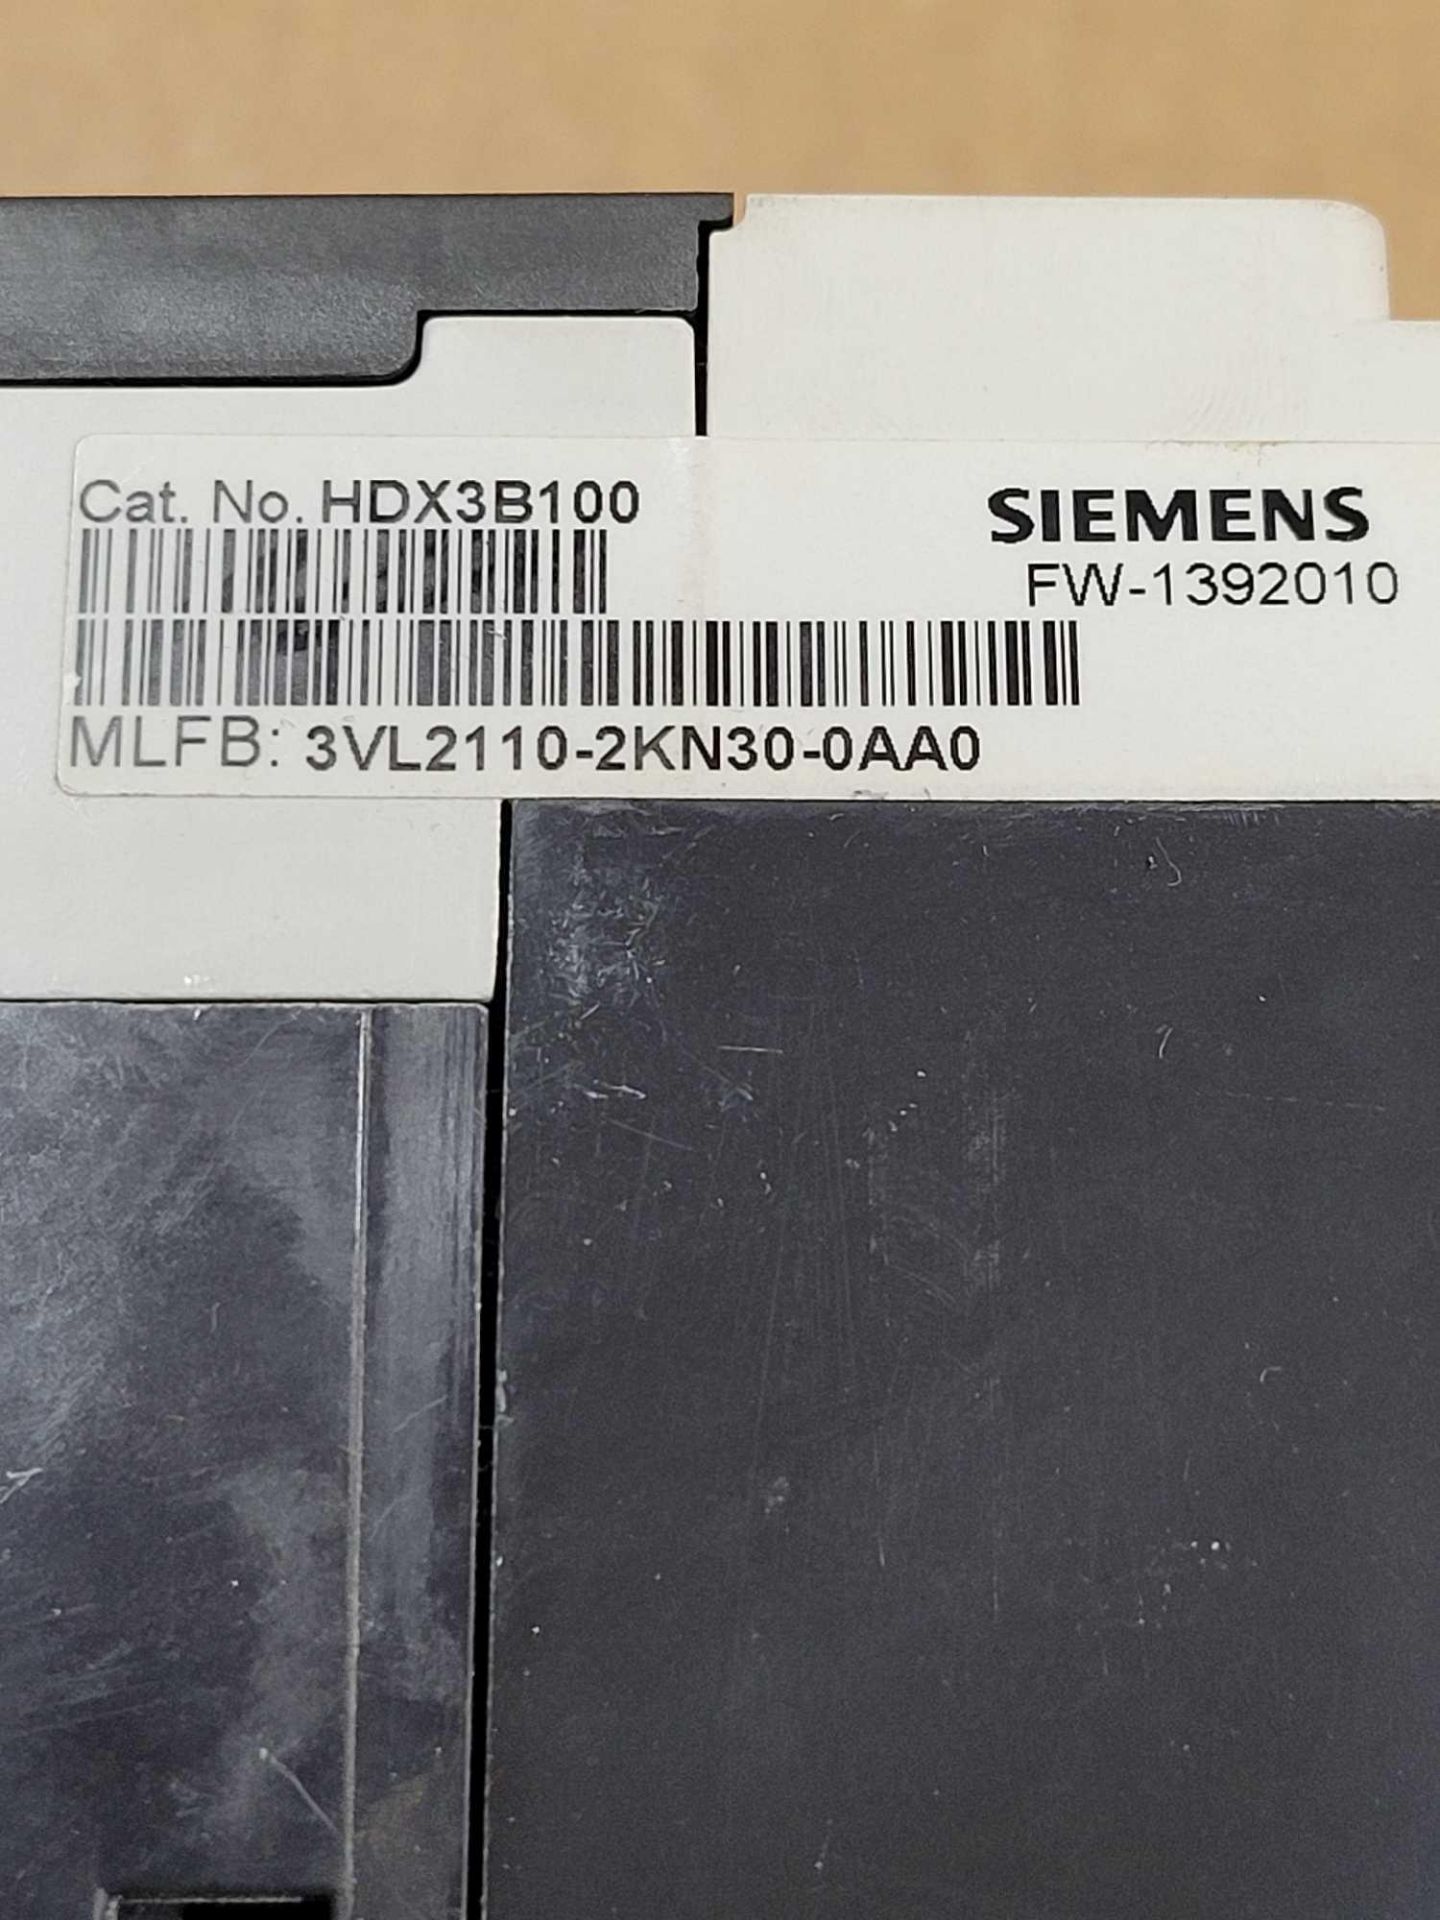 LOT OF 2 SIEMENS HDX3B100 / 100 Amp Circuit Breaker  /  Lot Weight: 9.6 lbs - Image 2 of 6